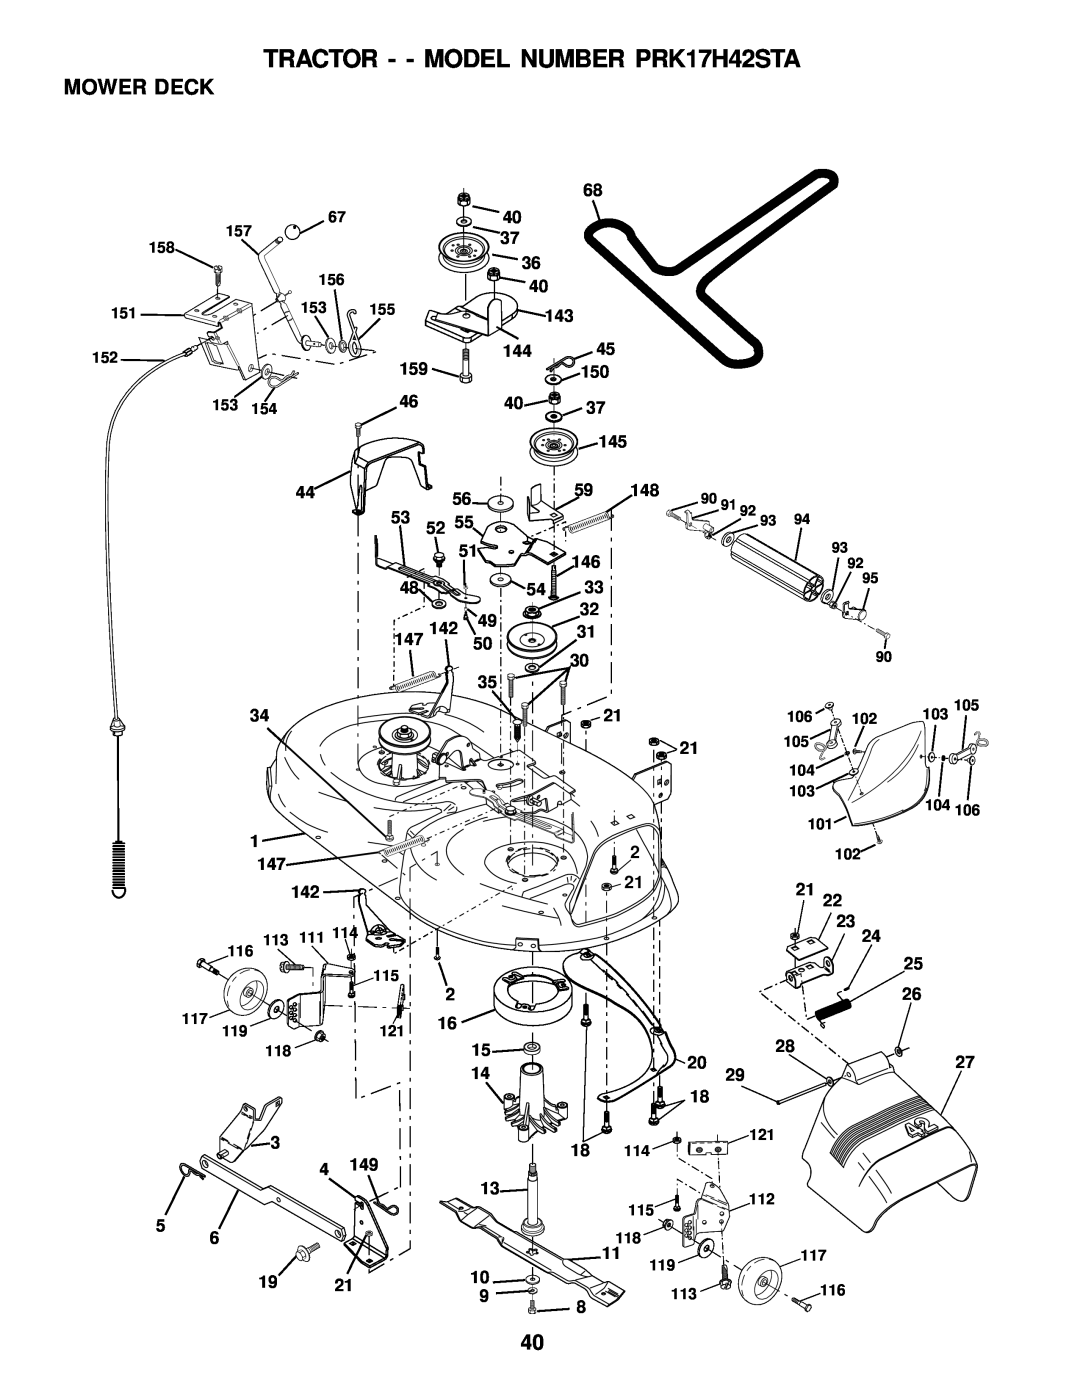 Poulan owner manual Mower Deck, TRACTOR - - MODEL NUMBER PRK17H42STA 